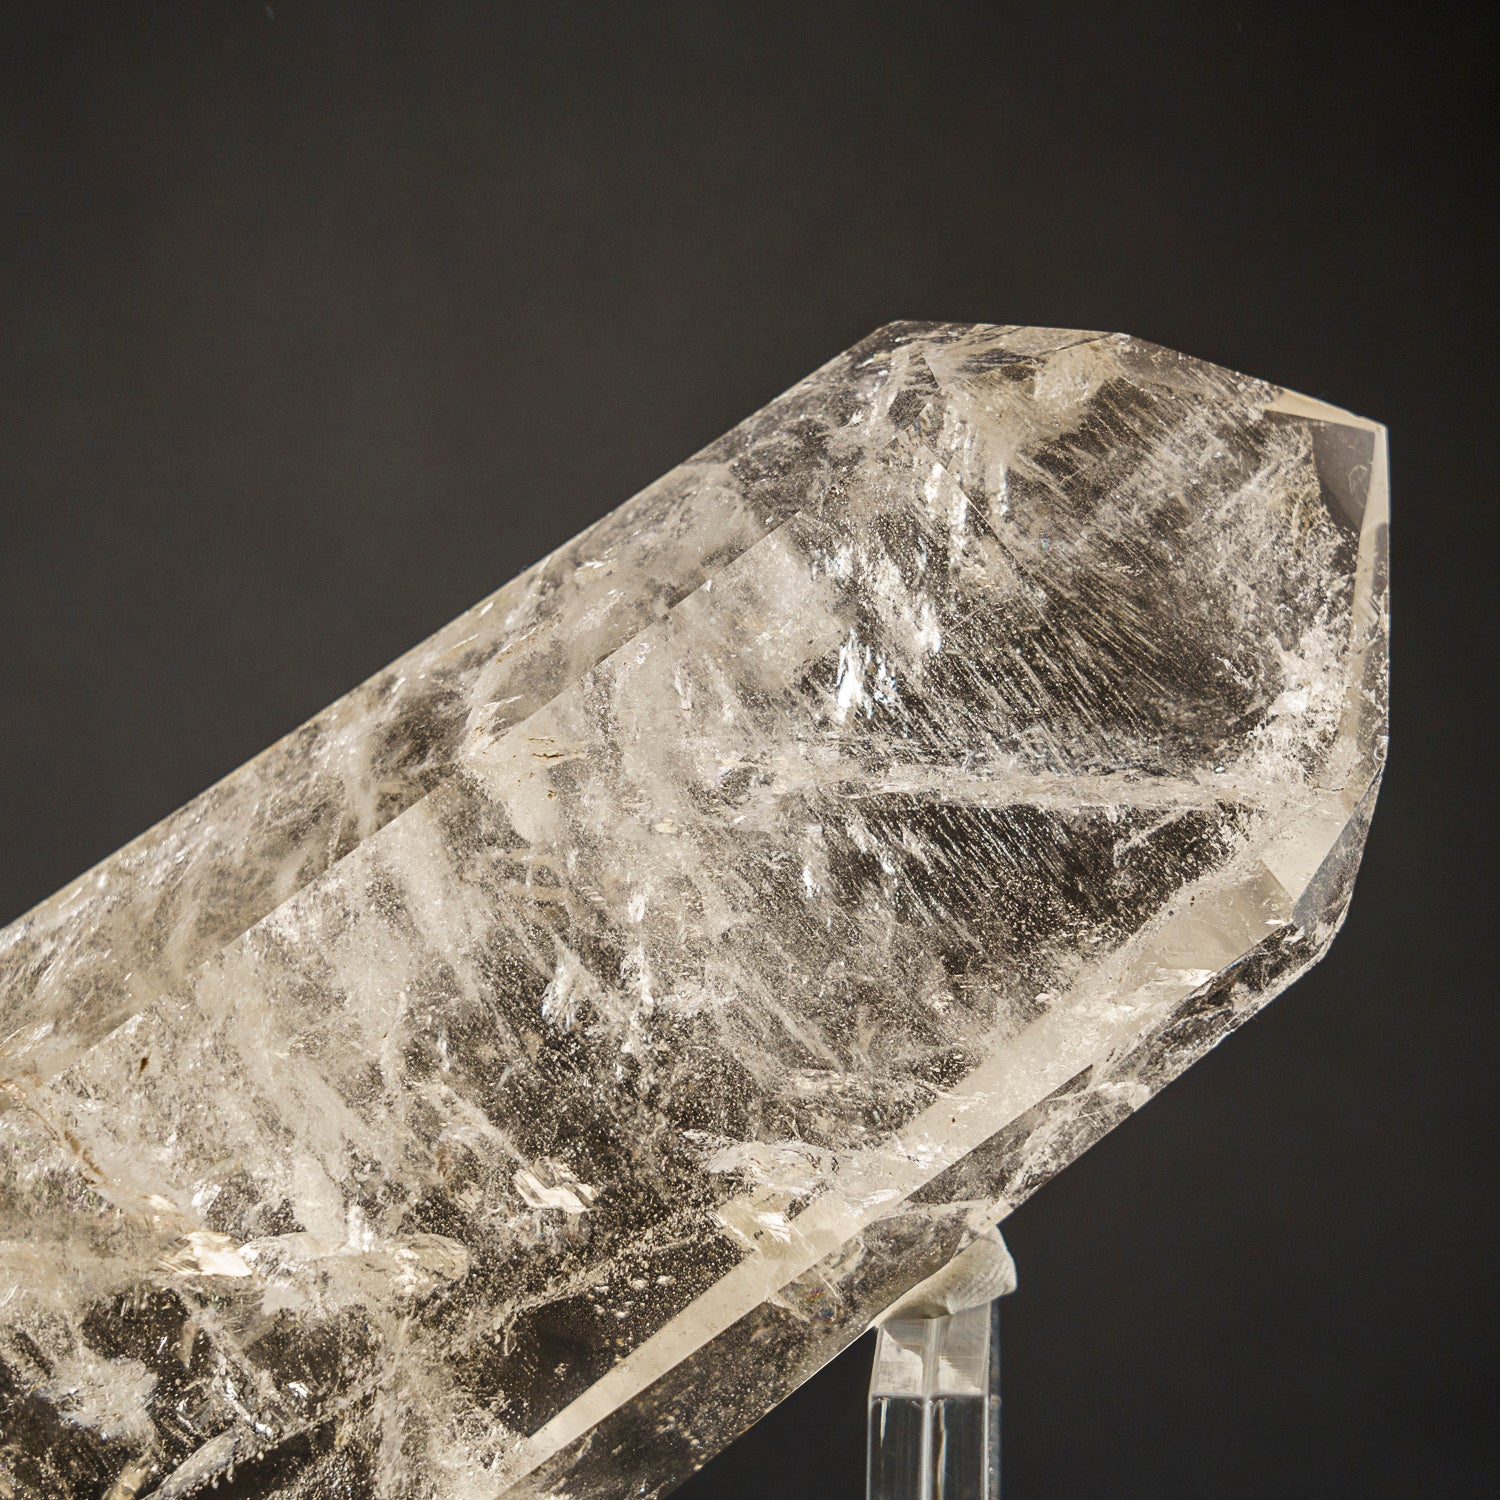 Genuine Polished Smoky Quartz Crystal Point From Brazil (4.5 lbs)